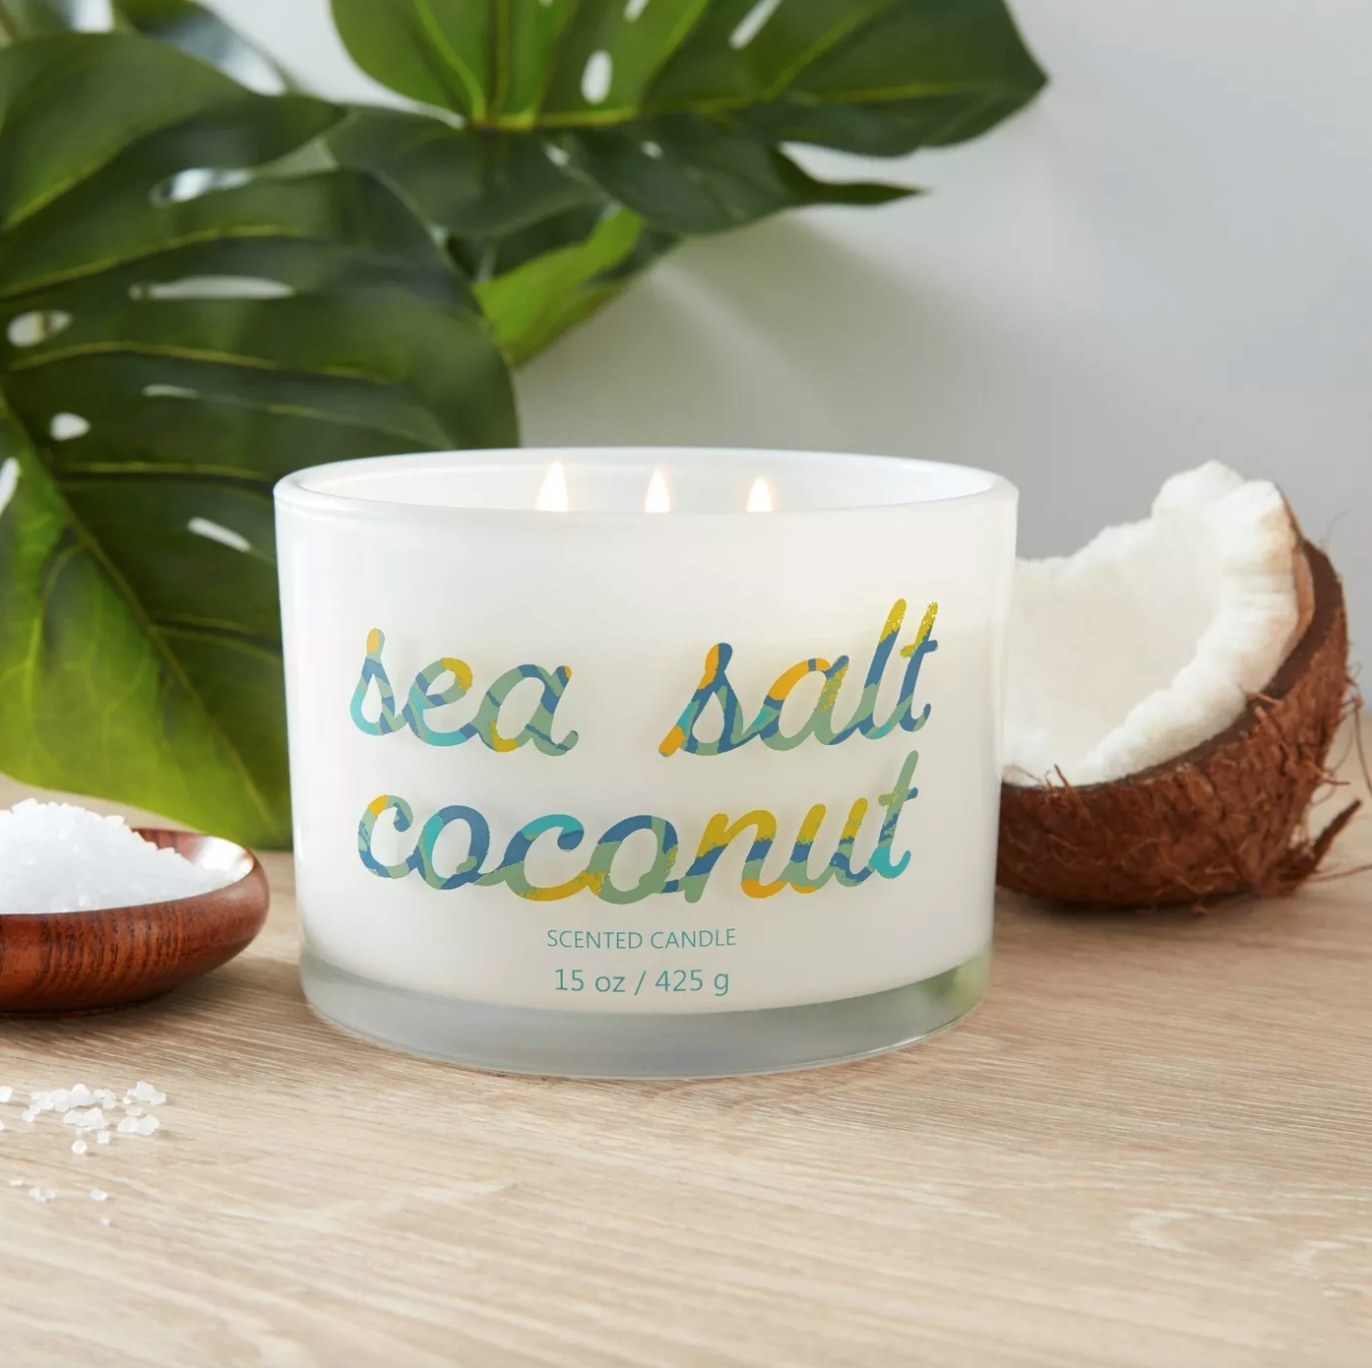 the sea salt coconut three-wick candle